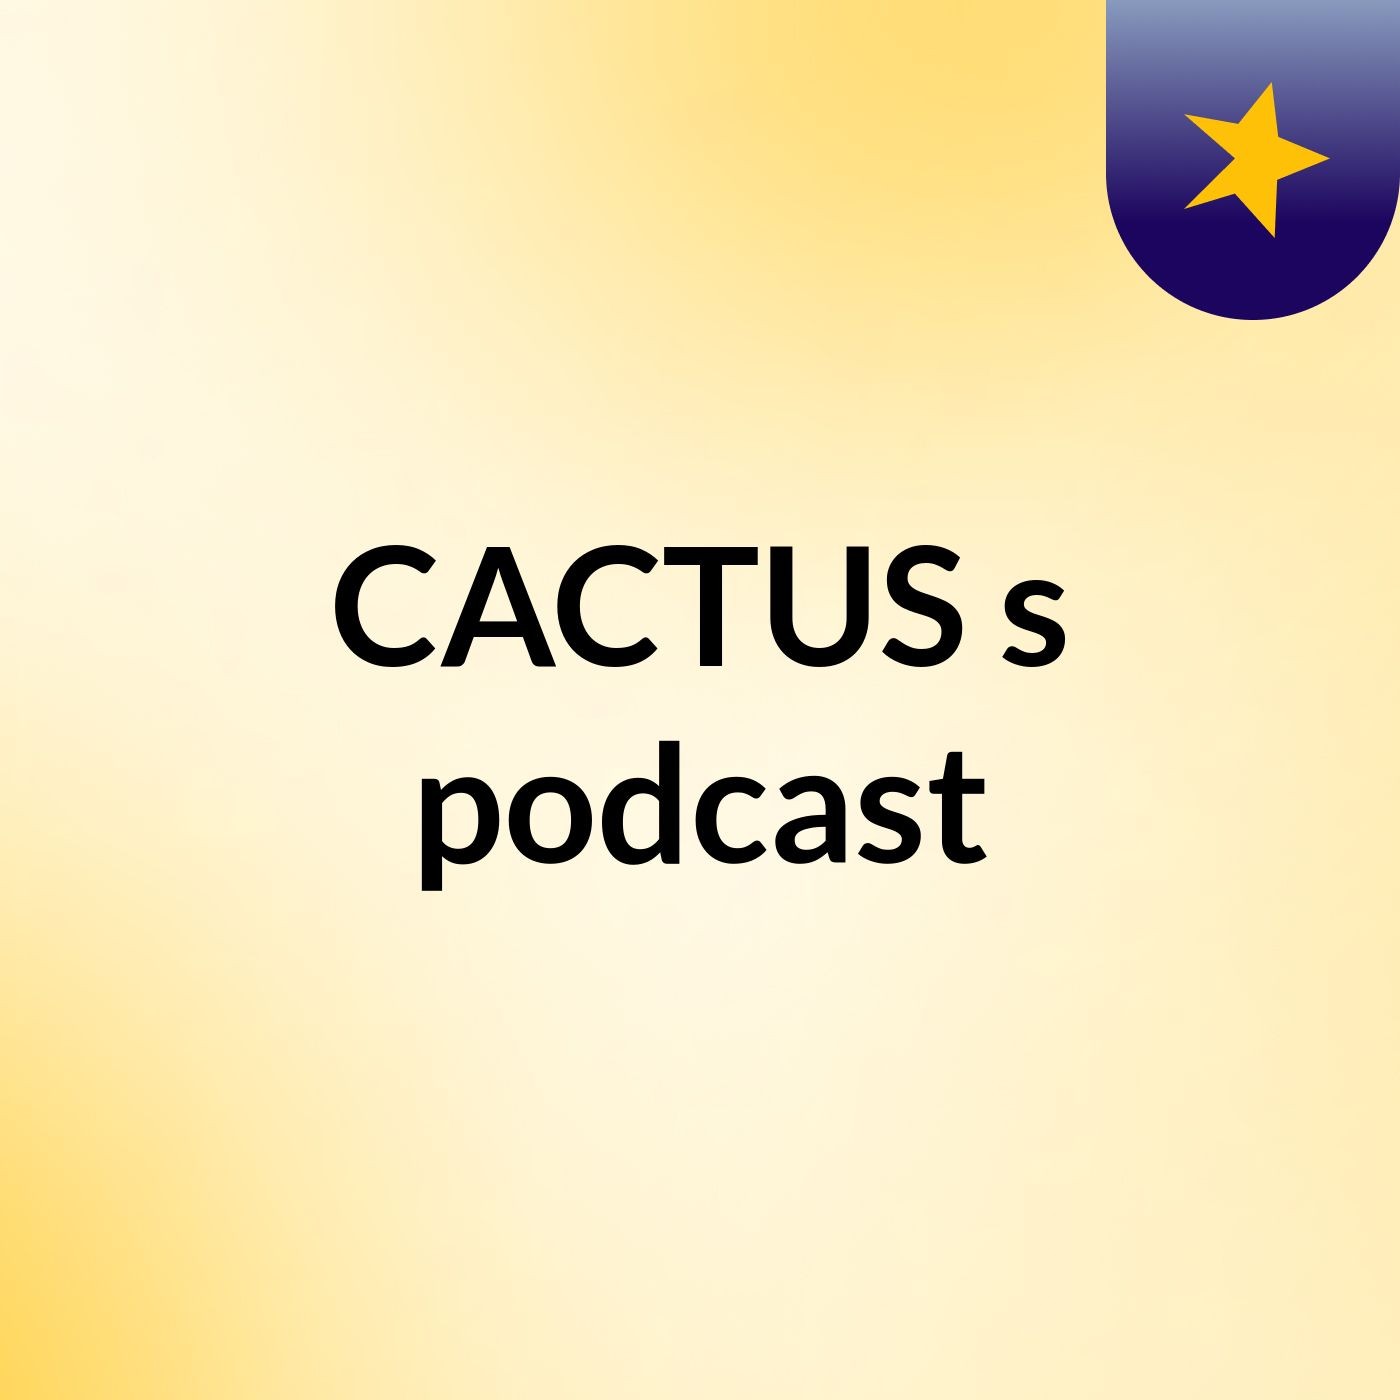 CACTUS's podcast